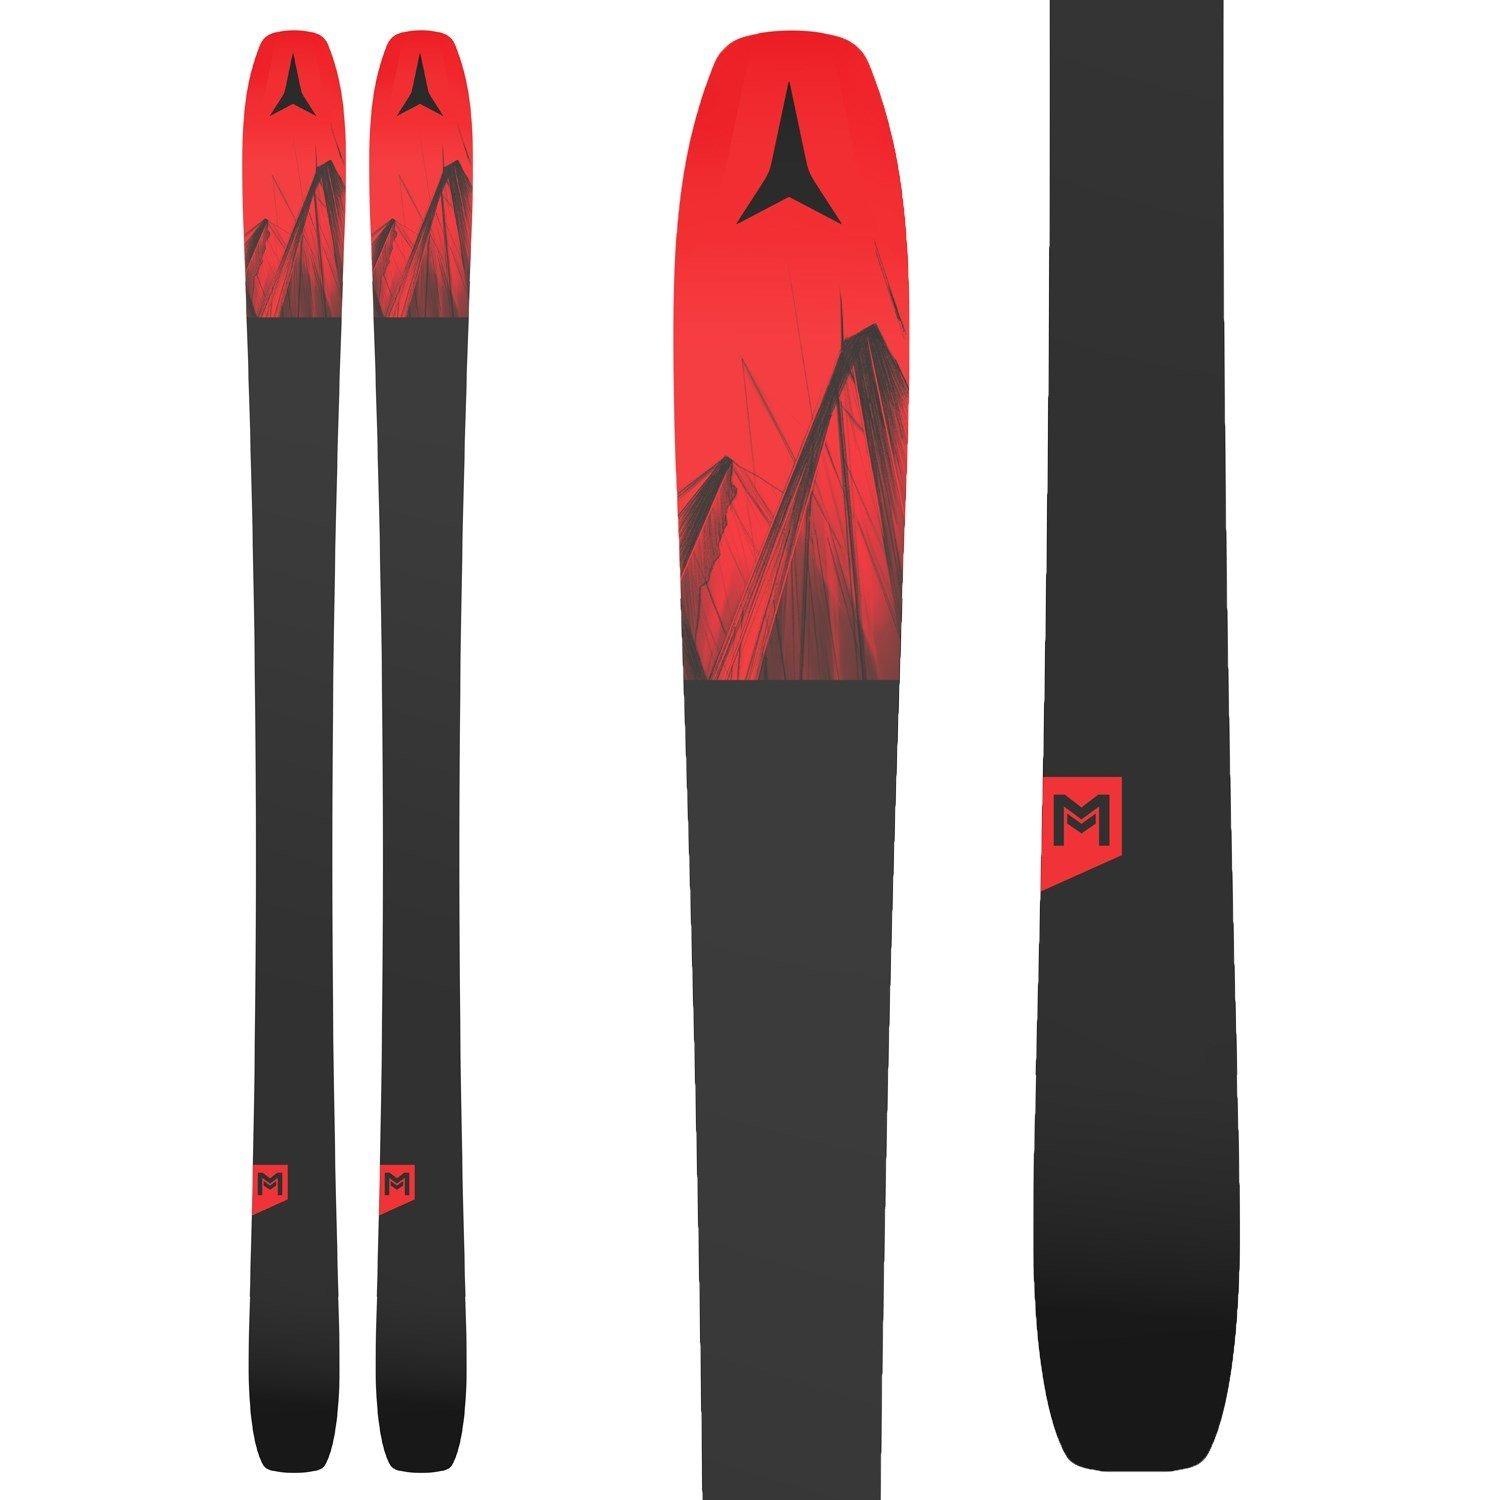 Atomic Maverick 95 TI Ski